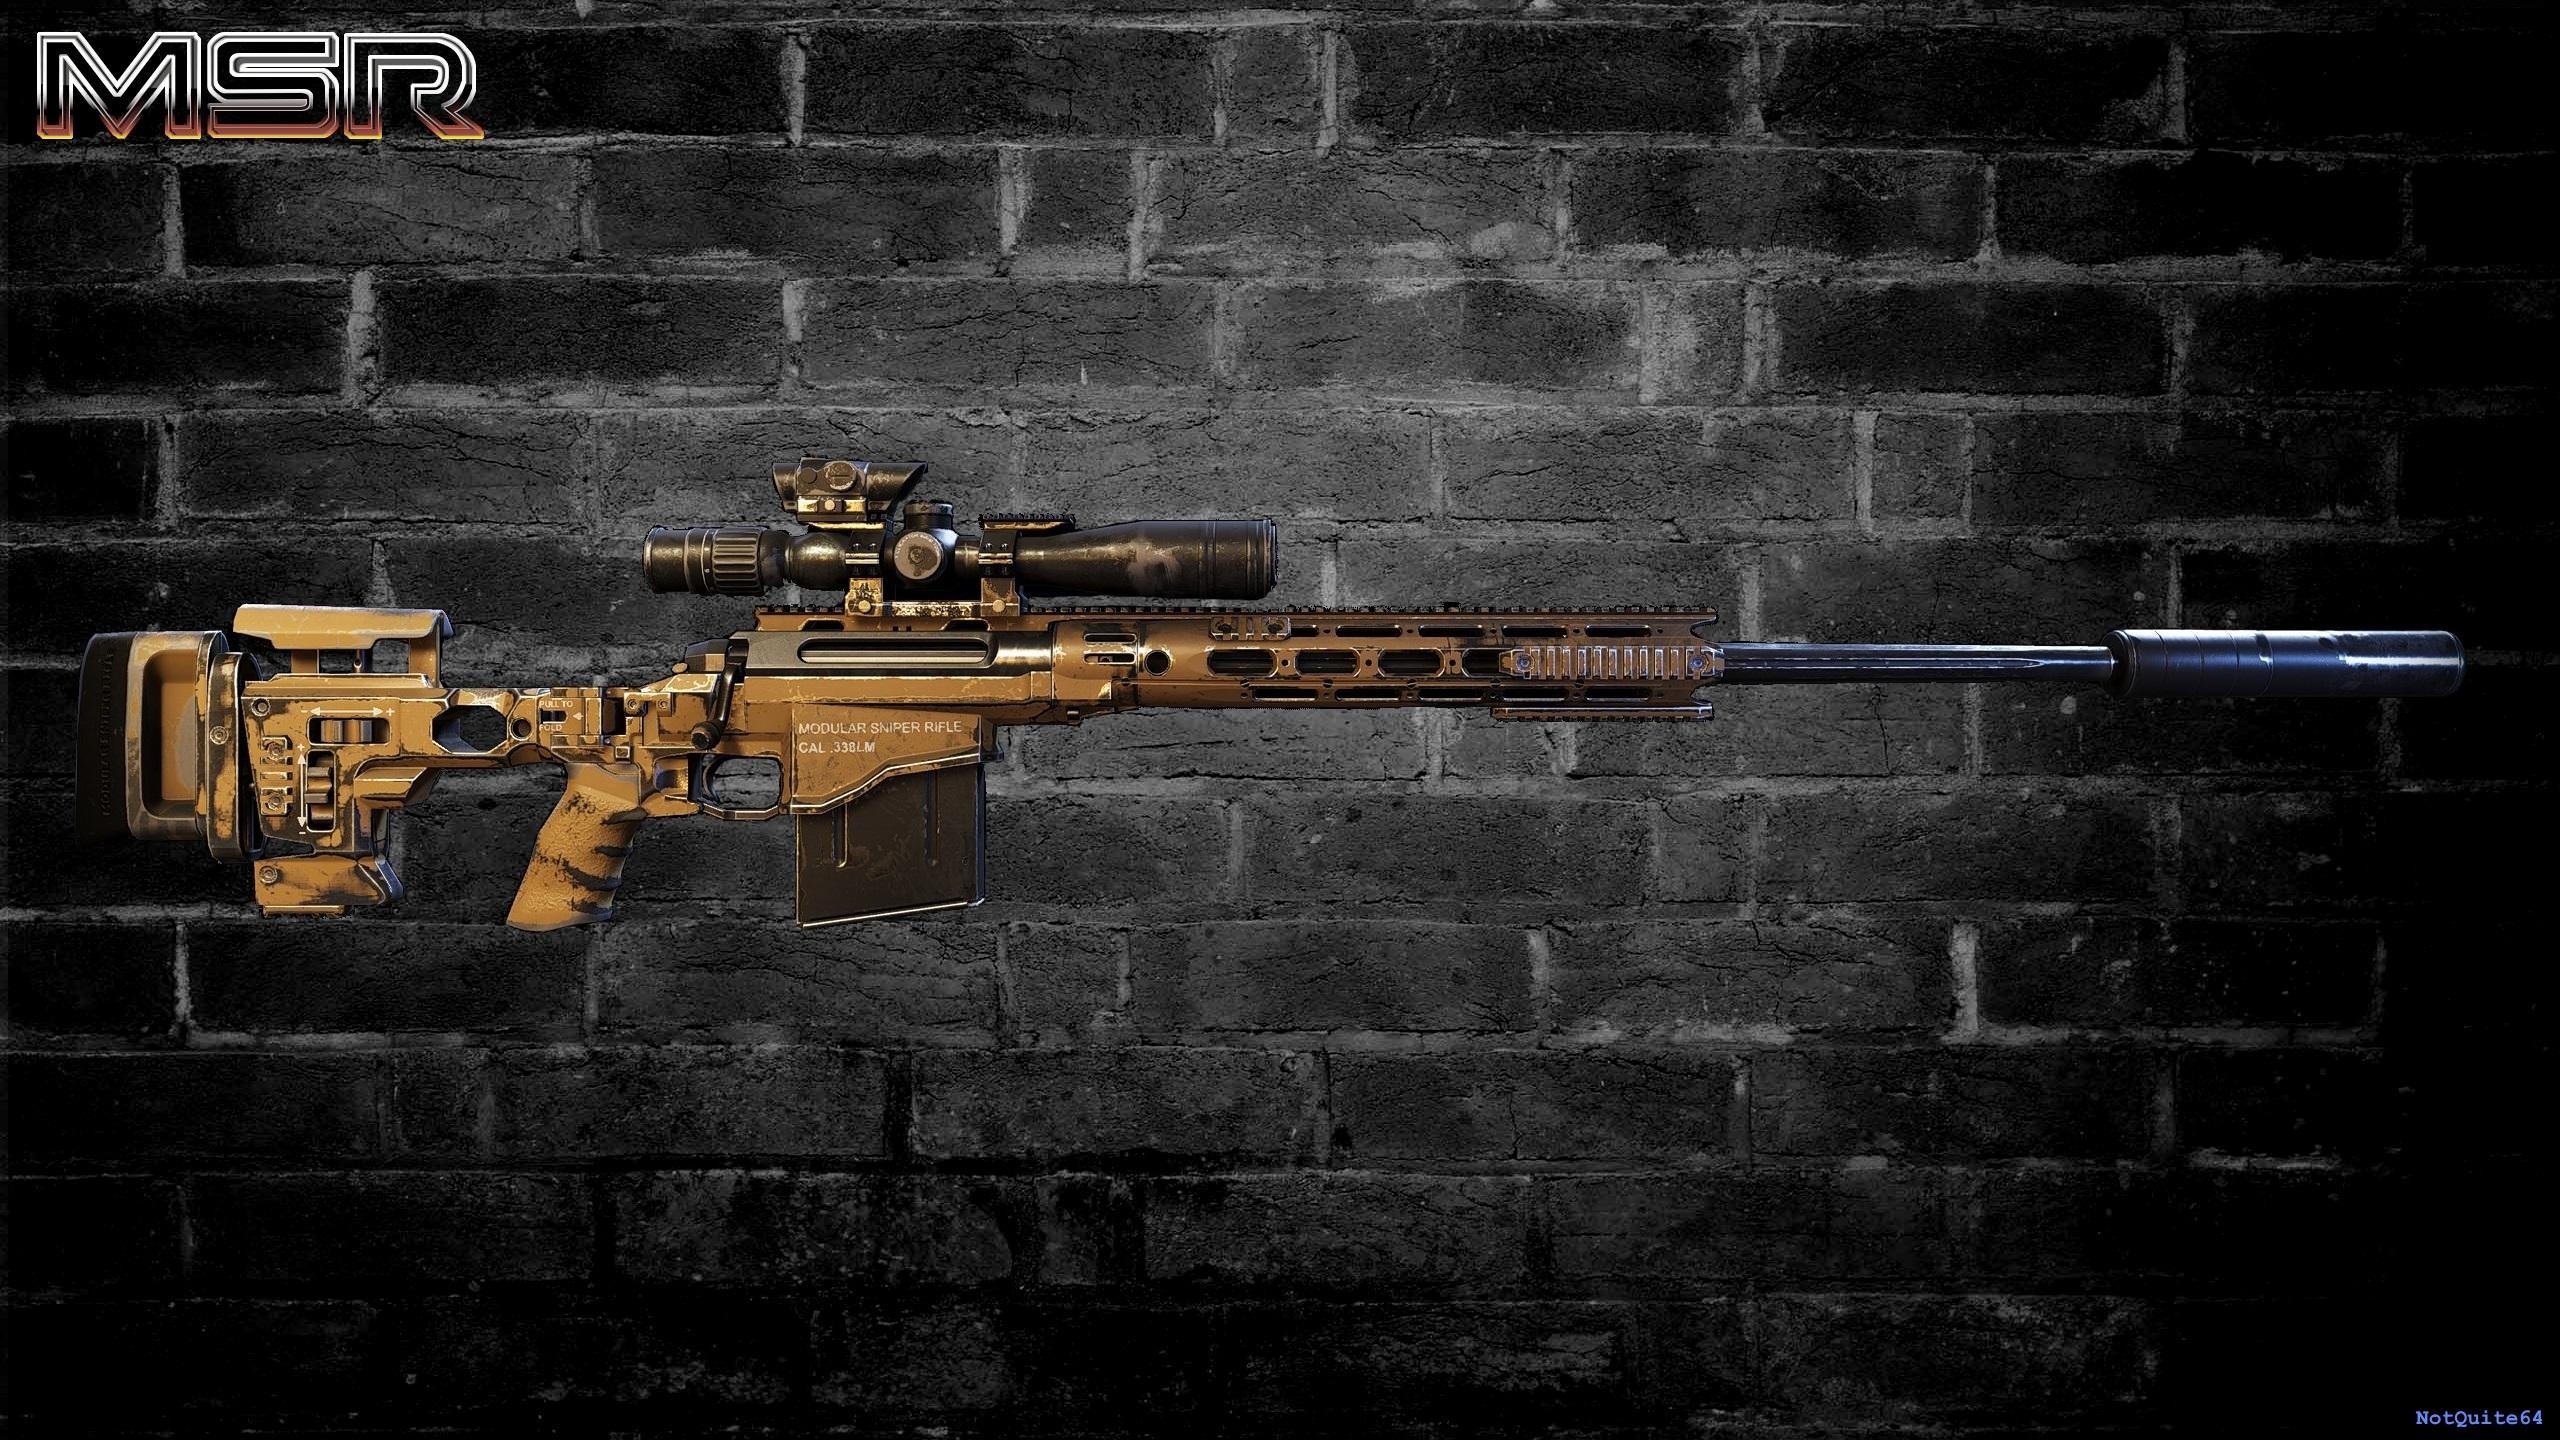 2560x1440 ImageMSR Sniper rifle wallpaper ...